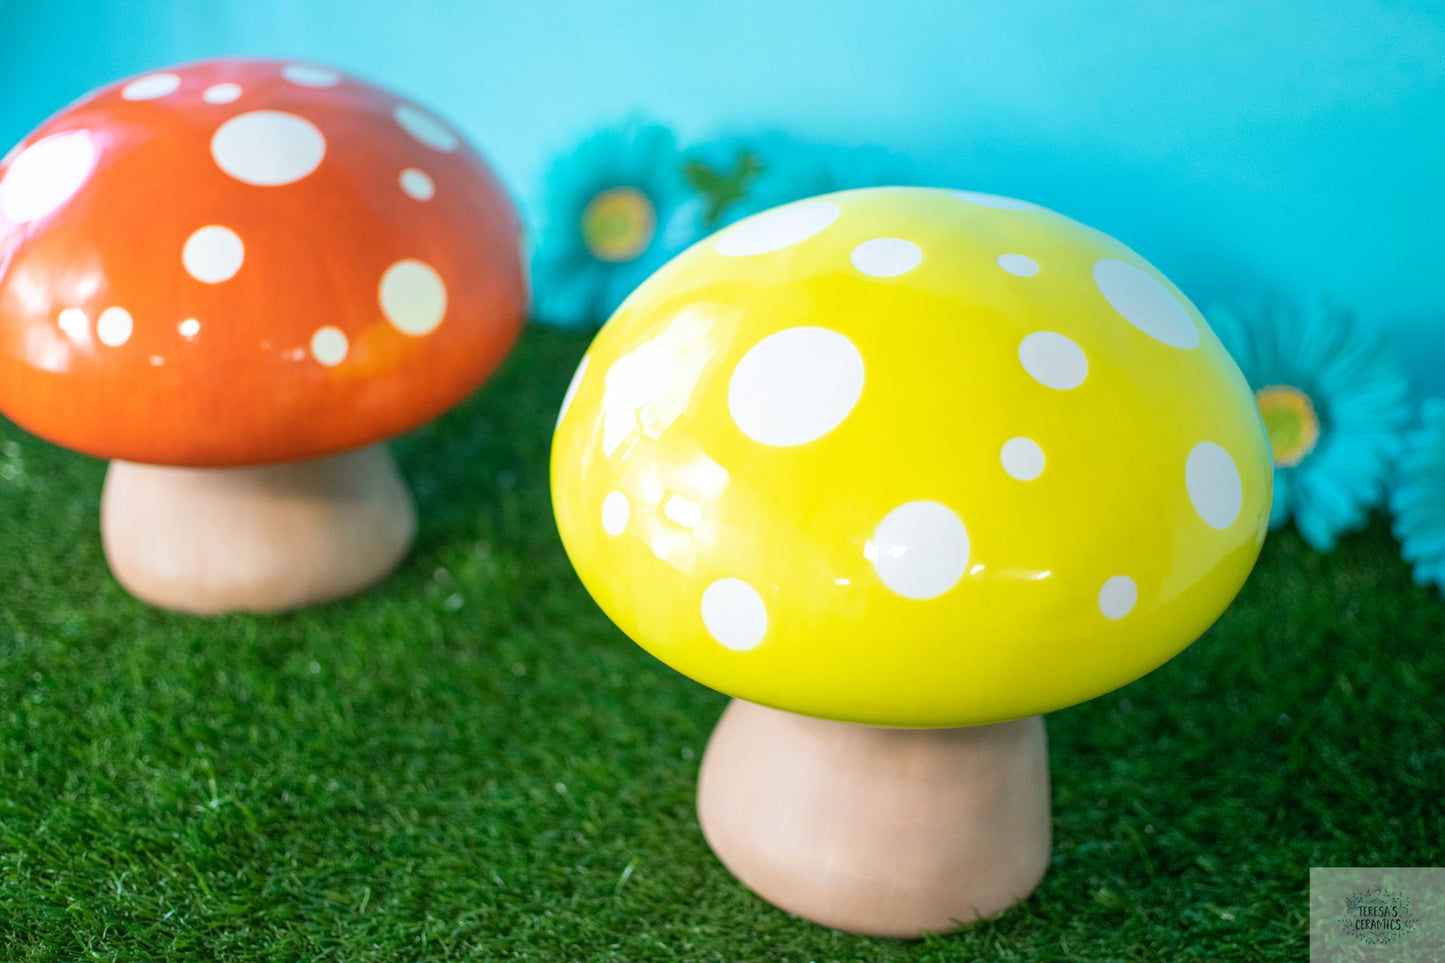 Jumbo Mushroom Art | Mushroom Garden Statue | Handmade Ceramic Art